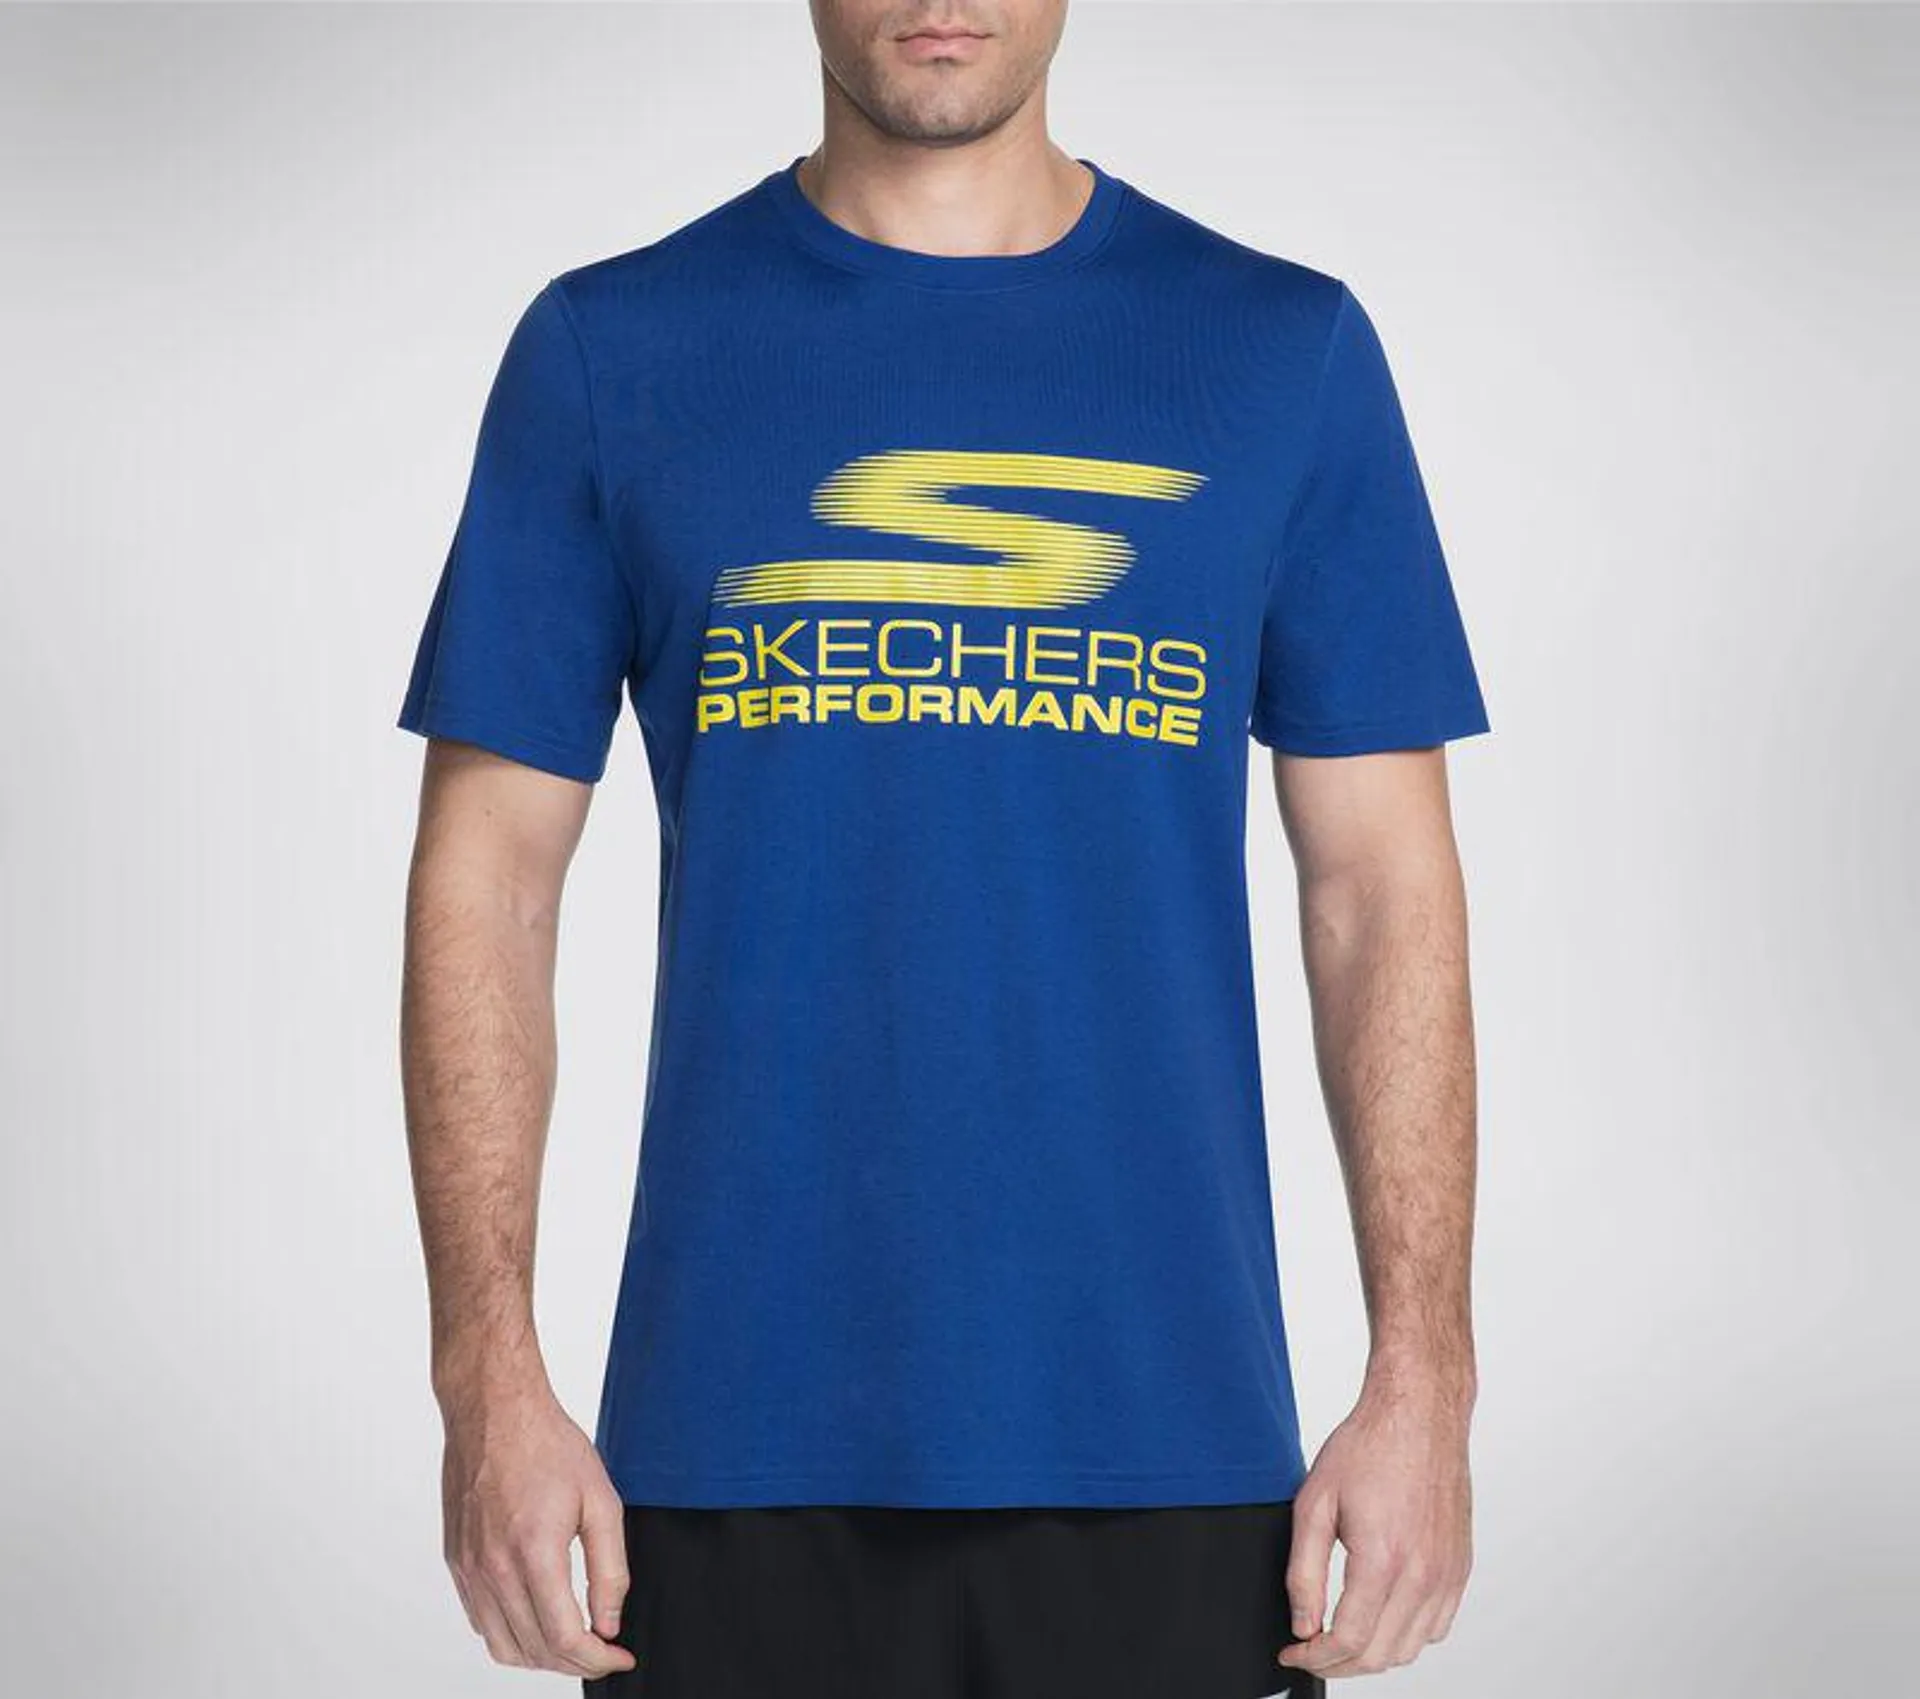 Skechers Wave Logo Tee Shirt